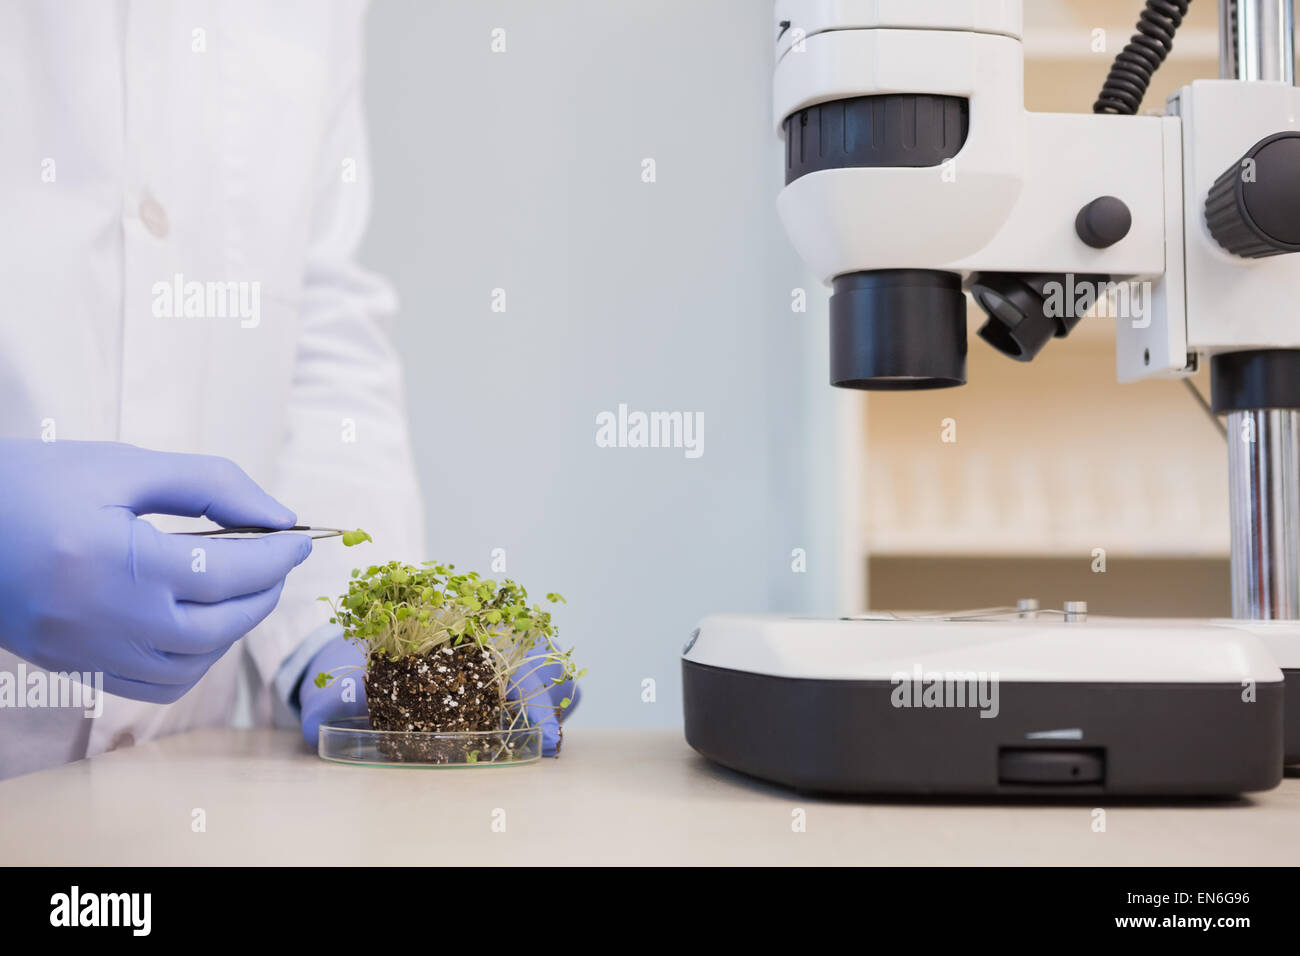 Scientist examining plants in petri dish Banque D'Images